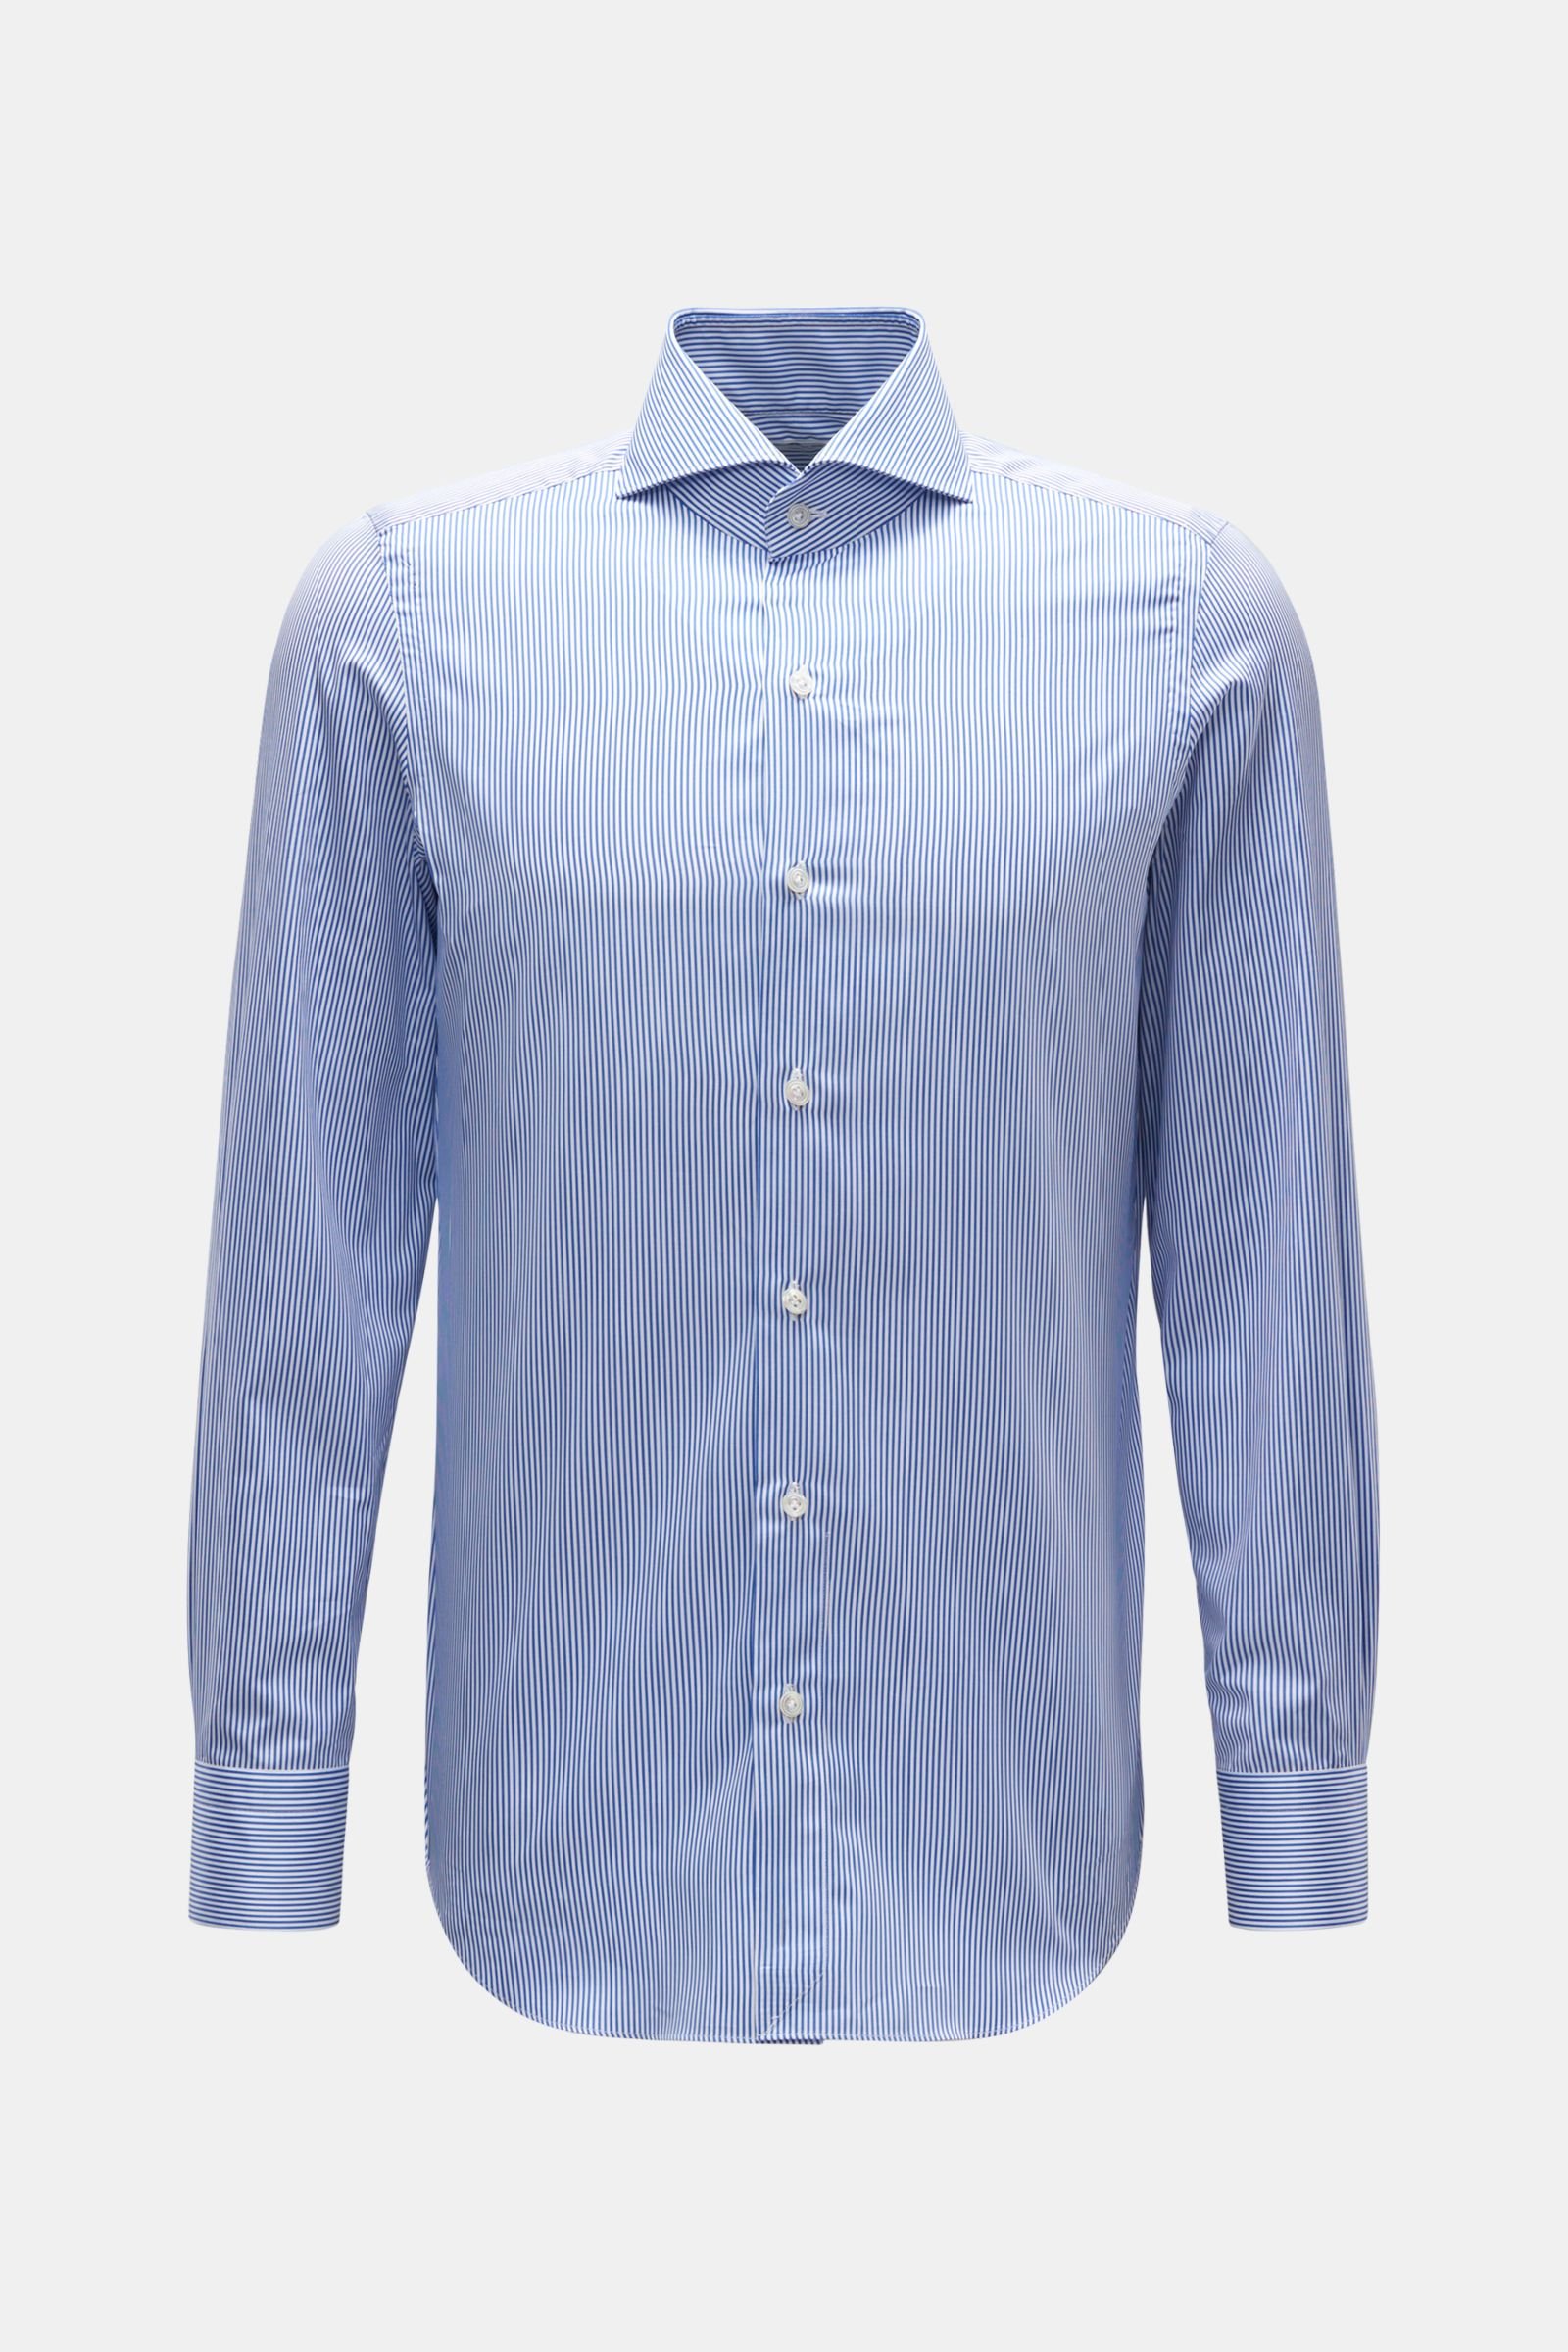 Business shirt 'Sergio Milano' shark collar, dark blue/white striped